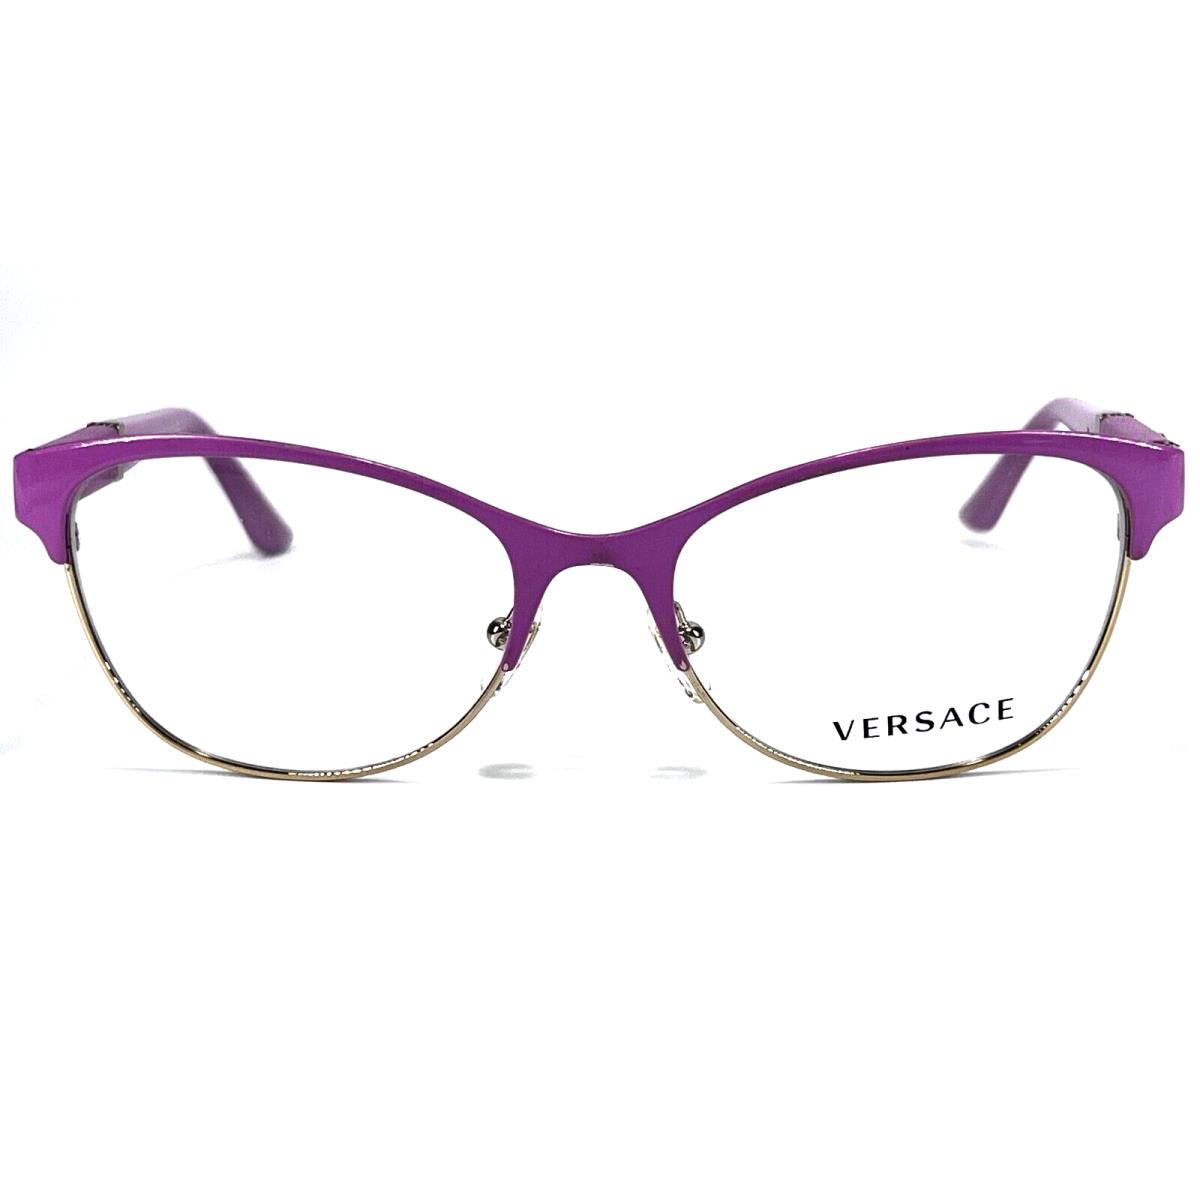 Versace eyeglasses  - 1368 Lilac/Pale Gold , Purple Frame 0